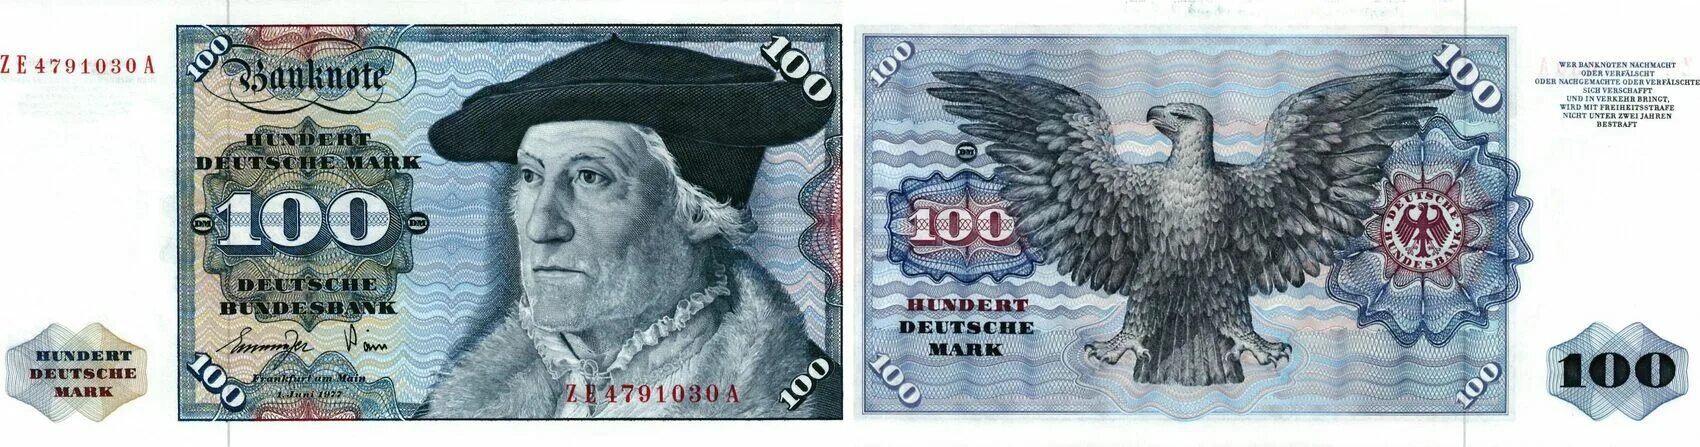 Купюра марка. 100 Дойч марок. Немецкая марка (Deutsche Mark). Дойч марки 1990 банкноты. 500 Дойч марок банкноты.